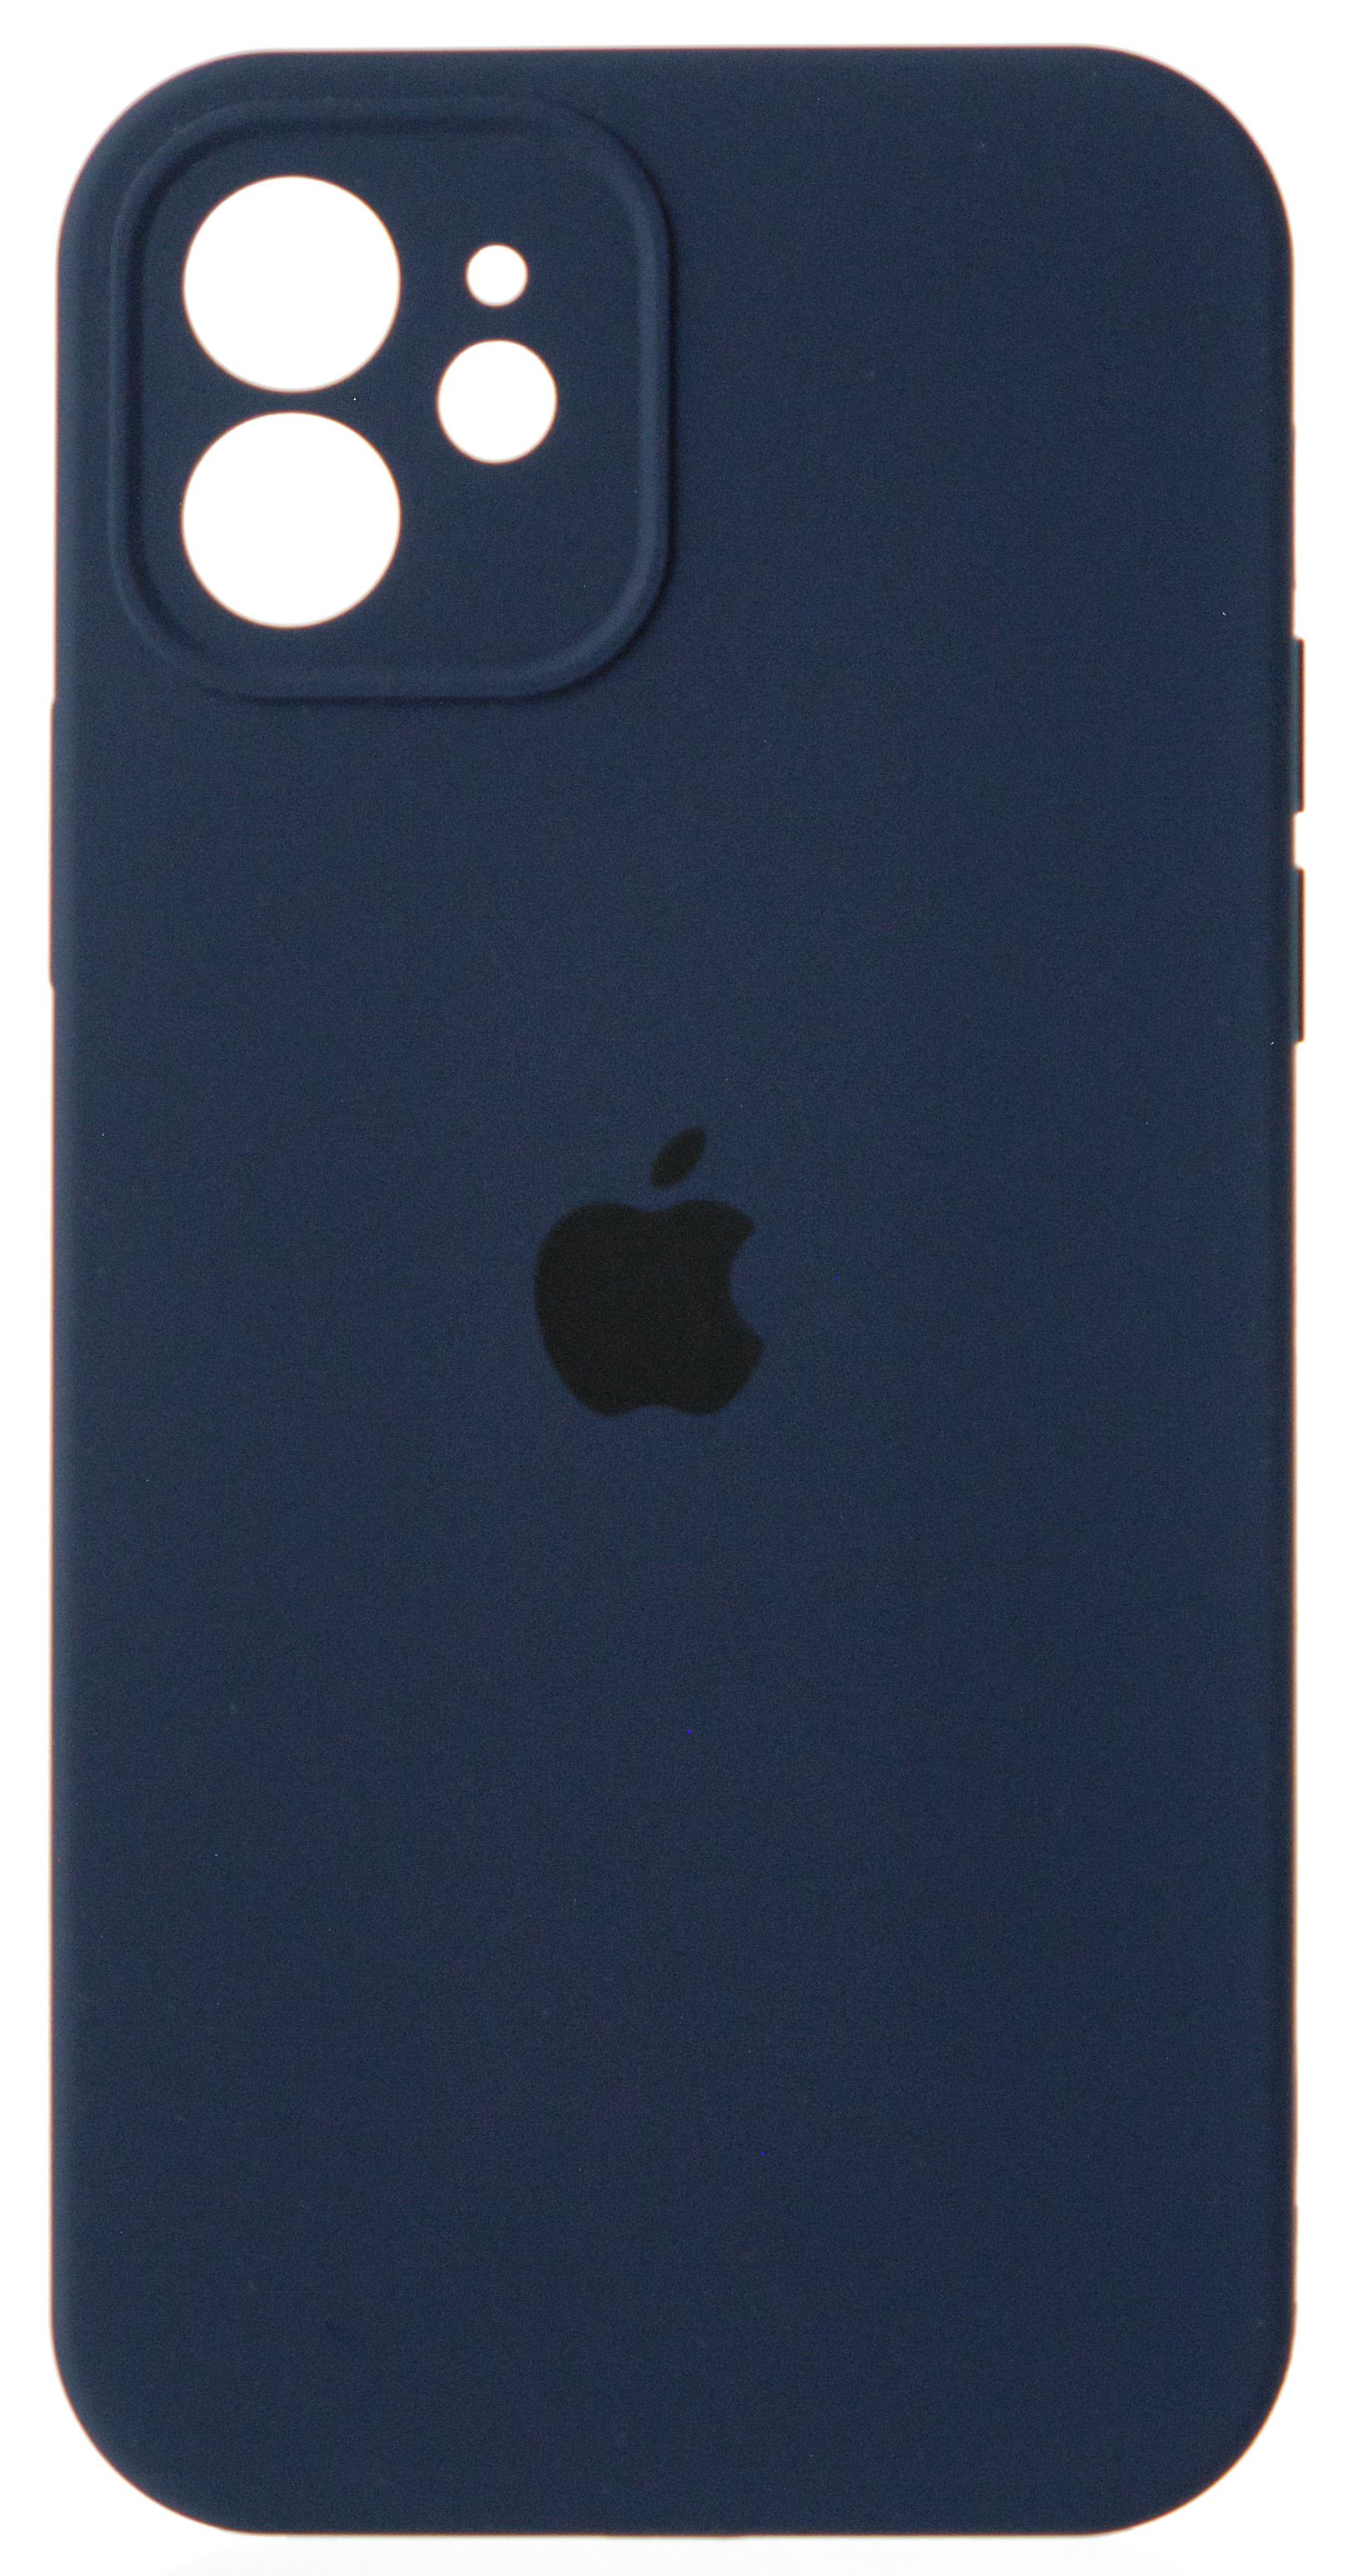 Чехол Silicone Case полная защита для iPhone 12 темно-синий